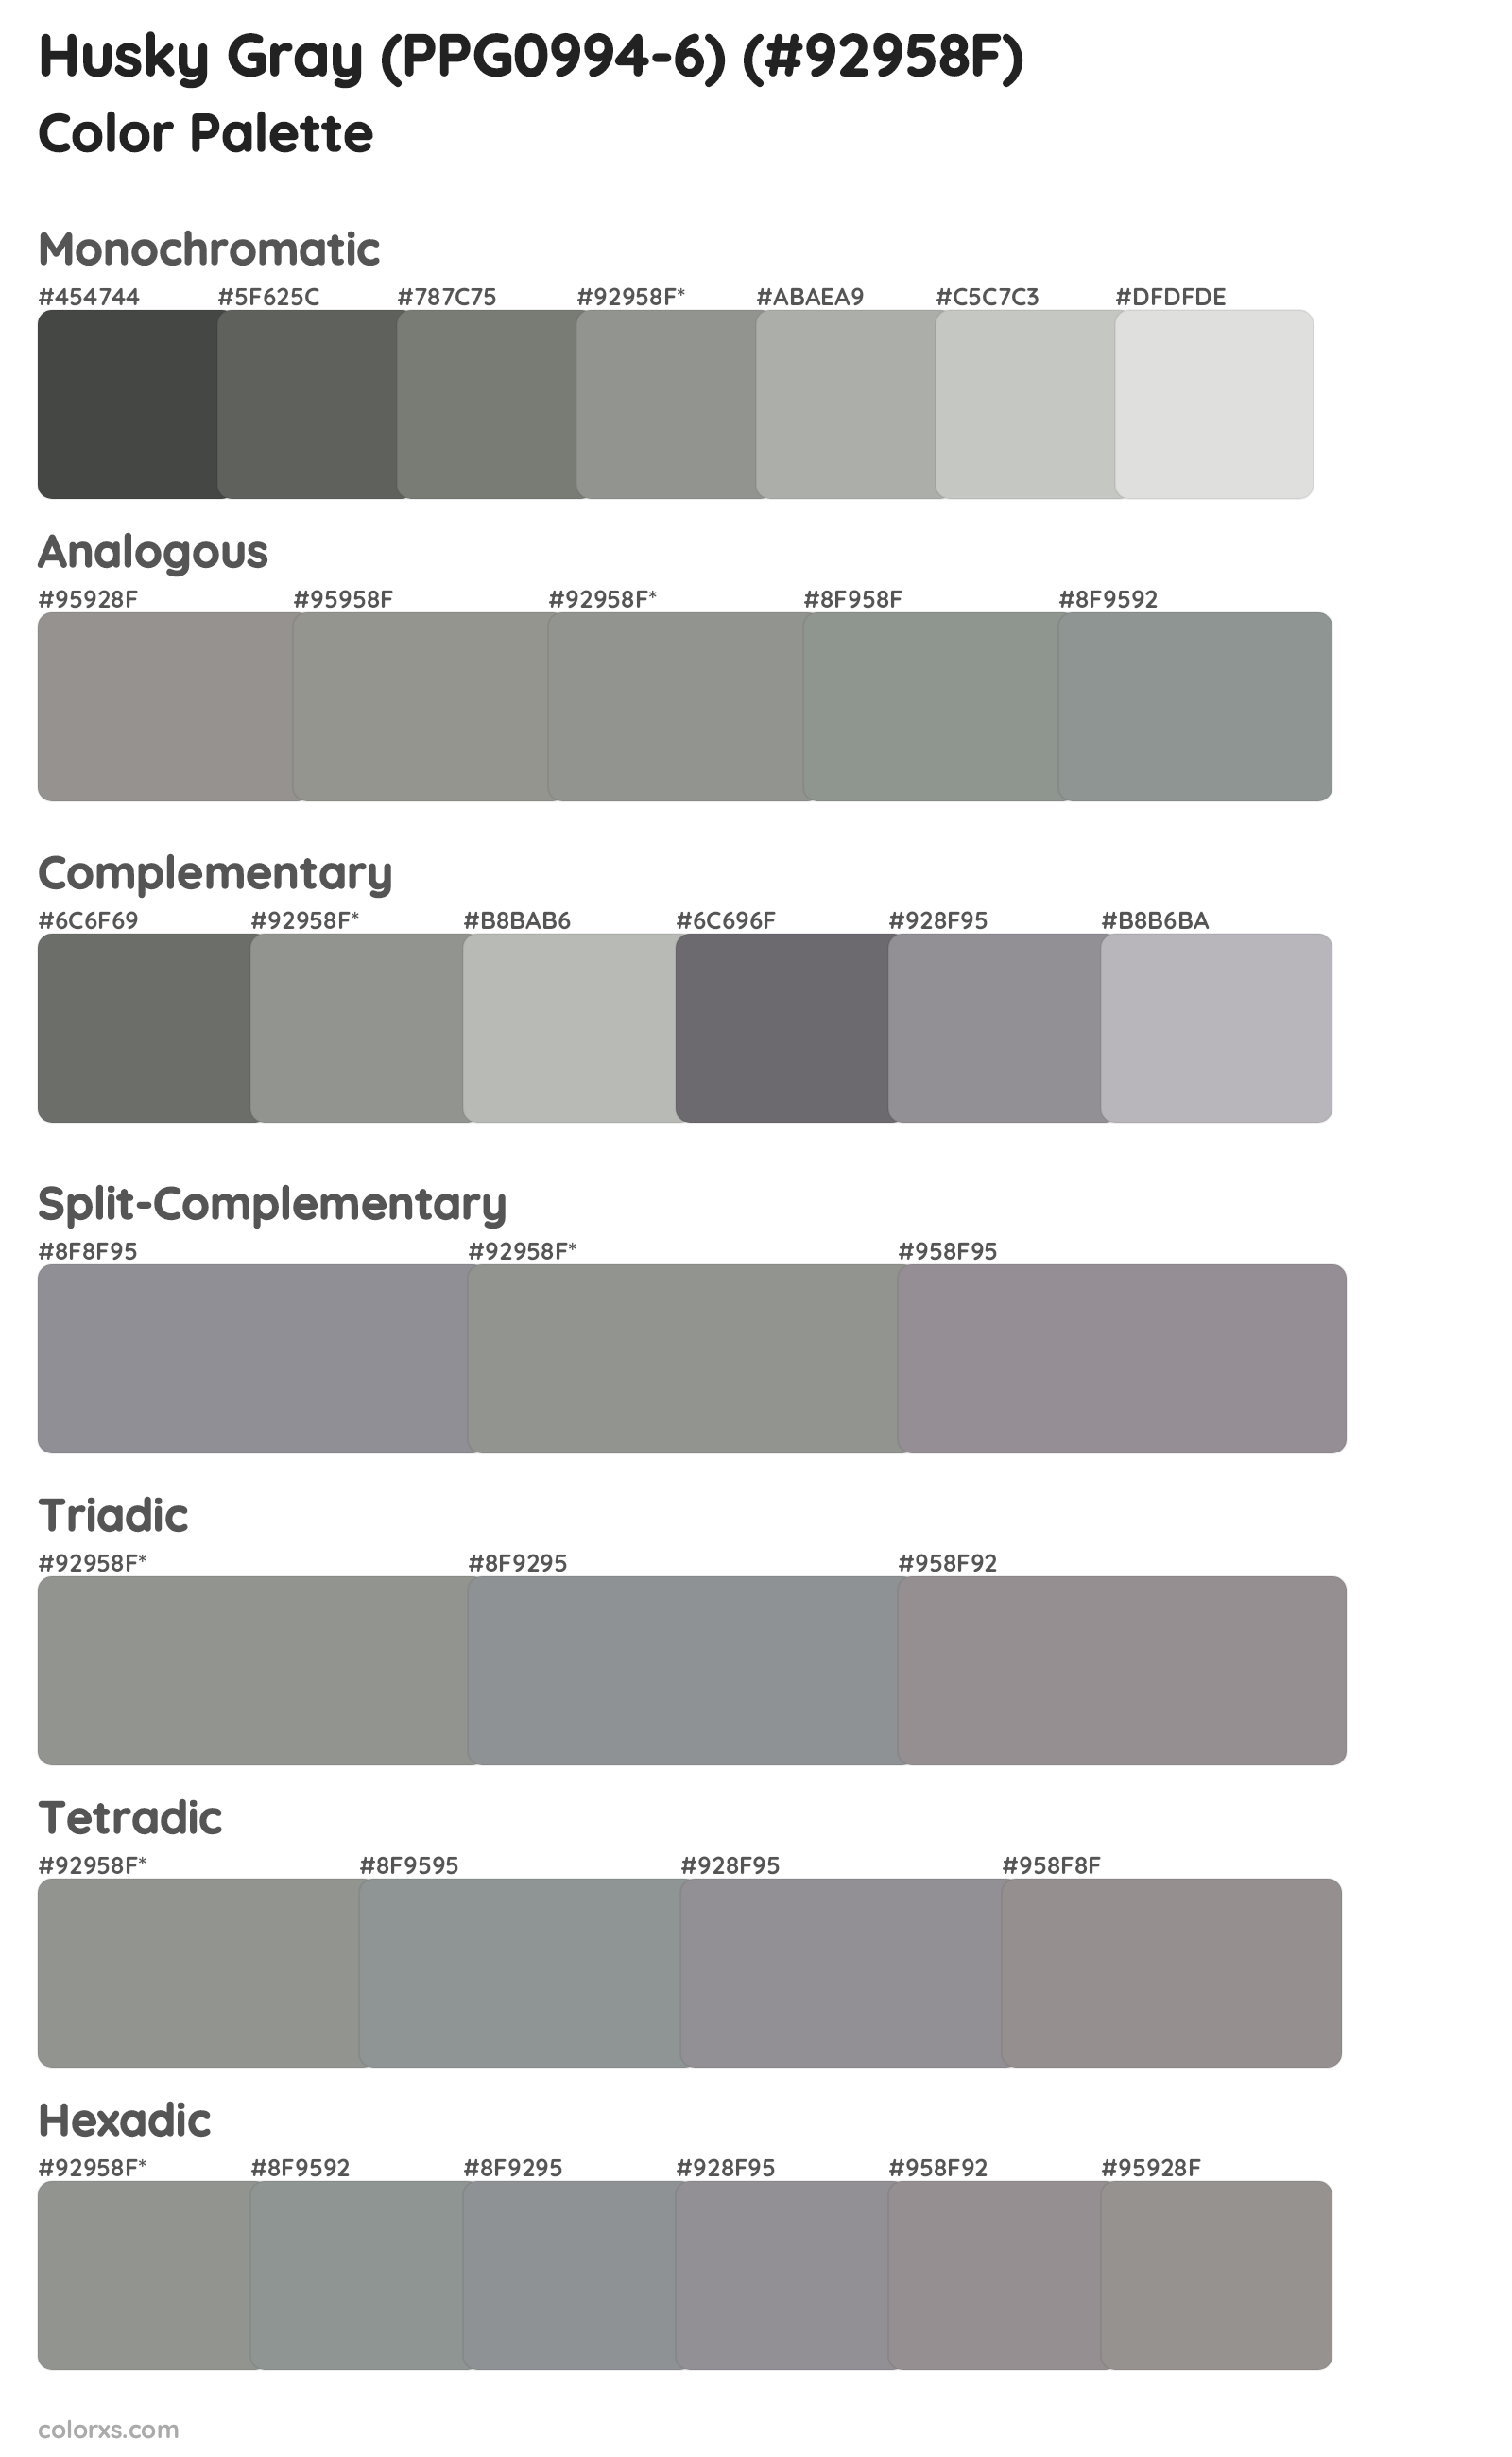 Husky Gray (PPG0994-6) Color Scheme Palettes